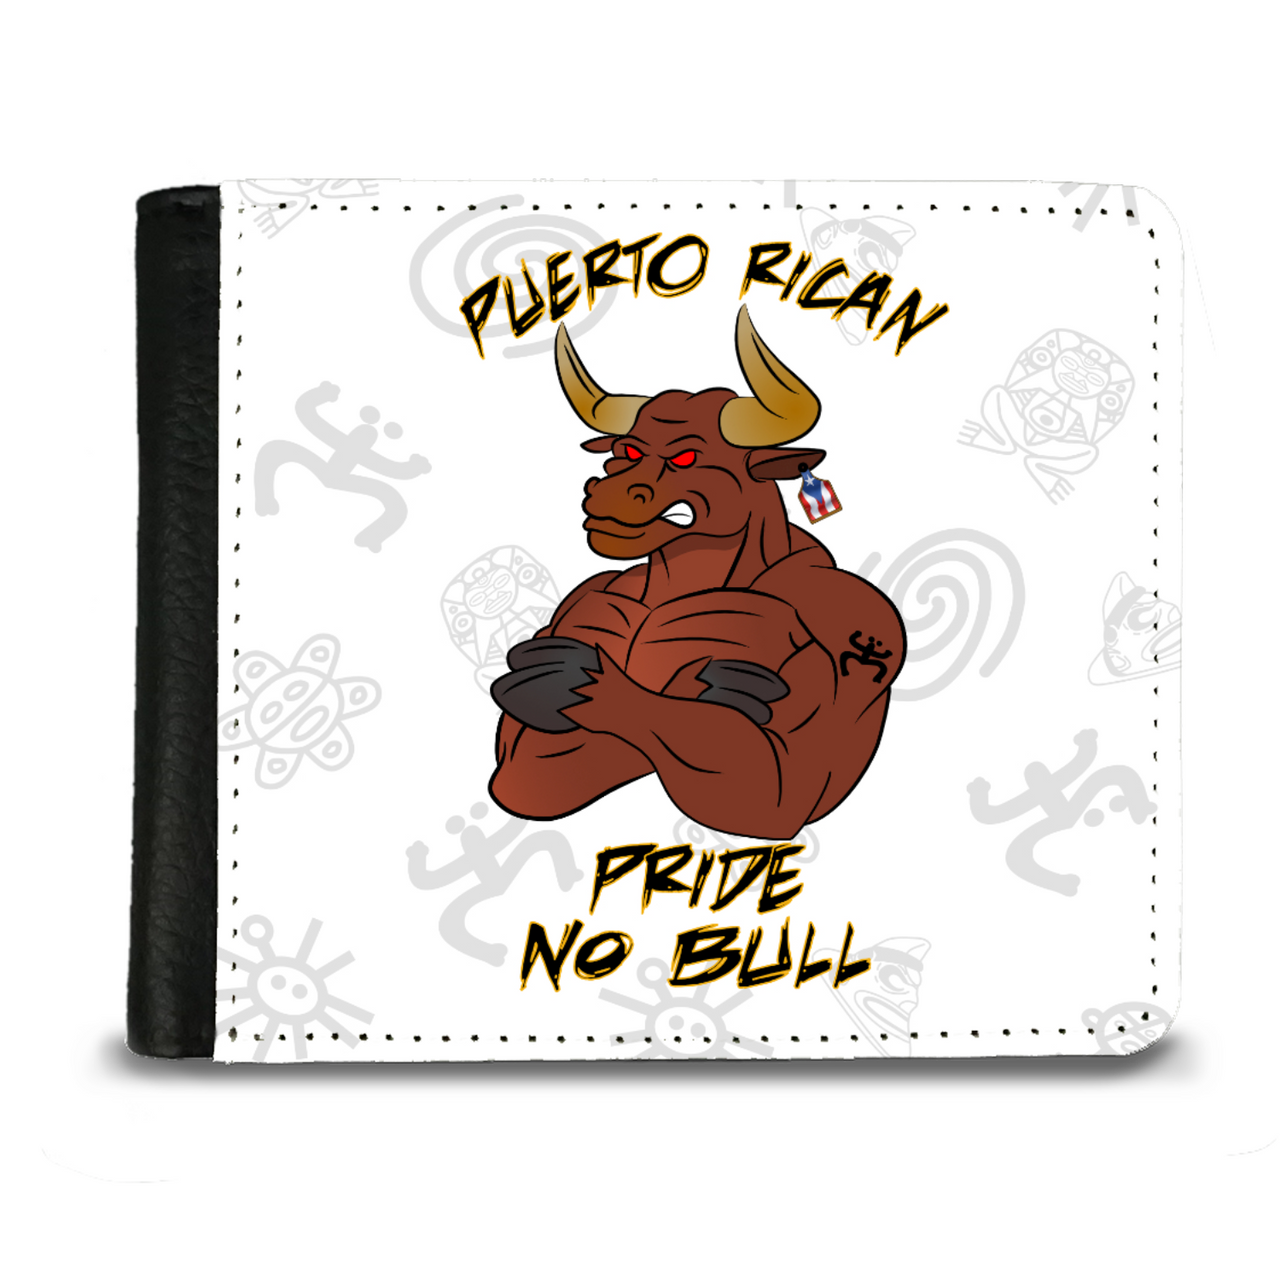 Puerto Rican Pride "No Bull" faux leather gentleman's wallet